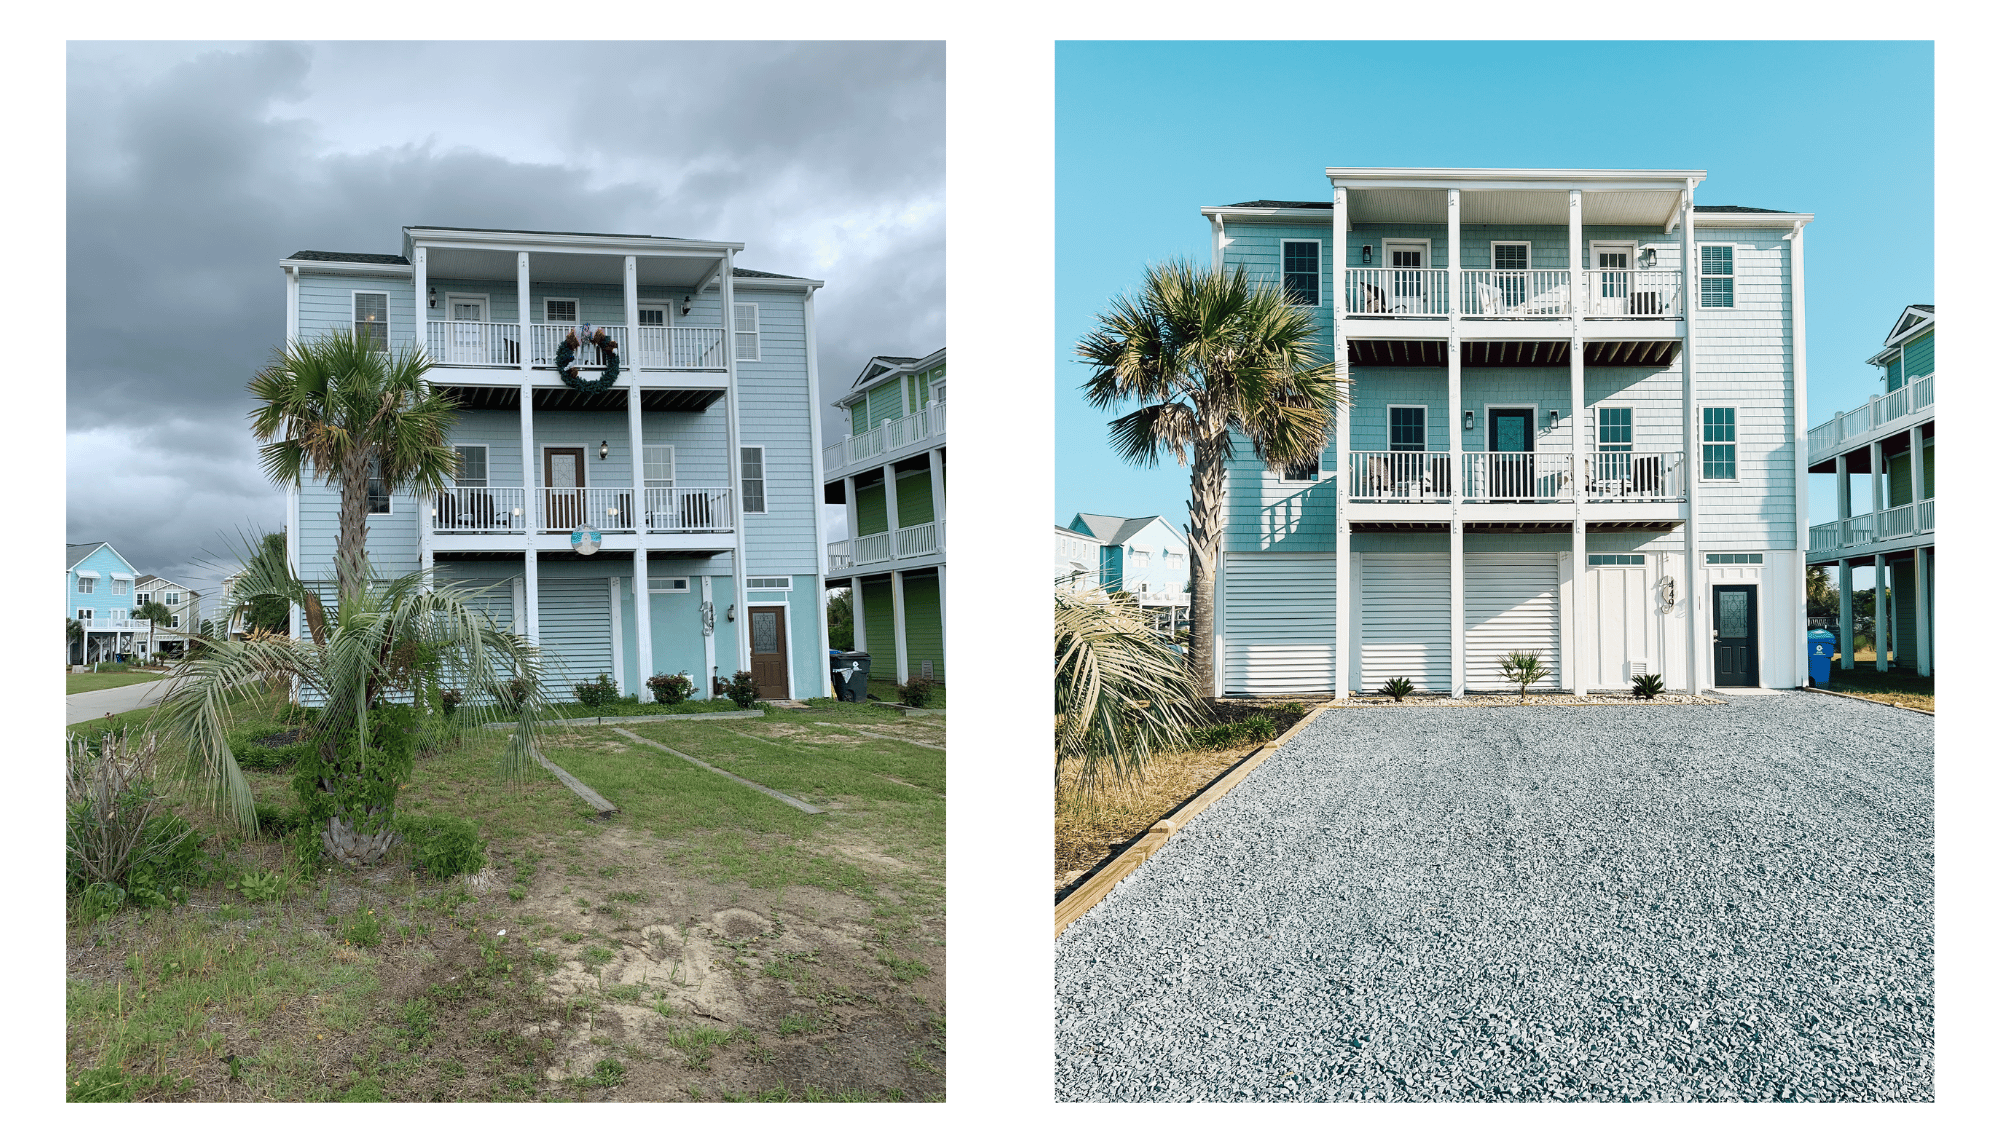 Anchors Awey Ocean Isle Beach Before and After, Beach House flip, Ocean isle beach, NC vacation rental, Stilettos and Diapers